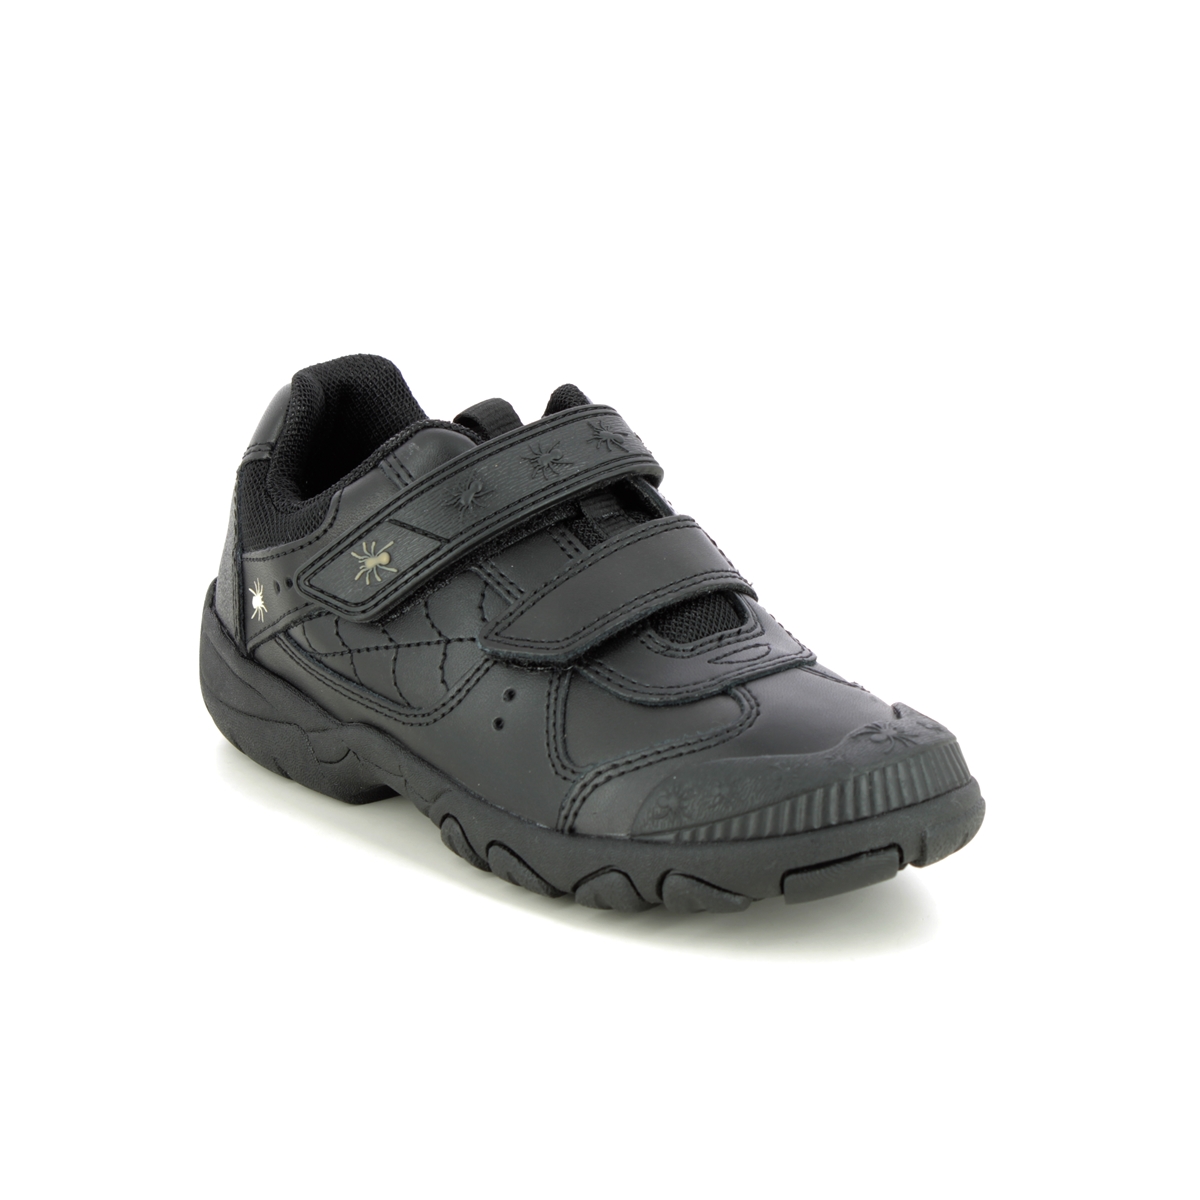 Start Rite Tarantula Black leather Kids Boys Shoes 2272-76F in a Plain Leather in Size 1.5